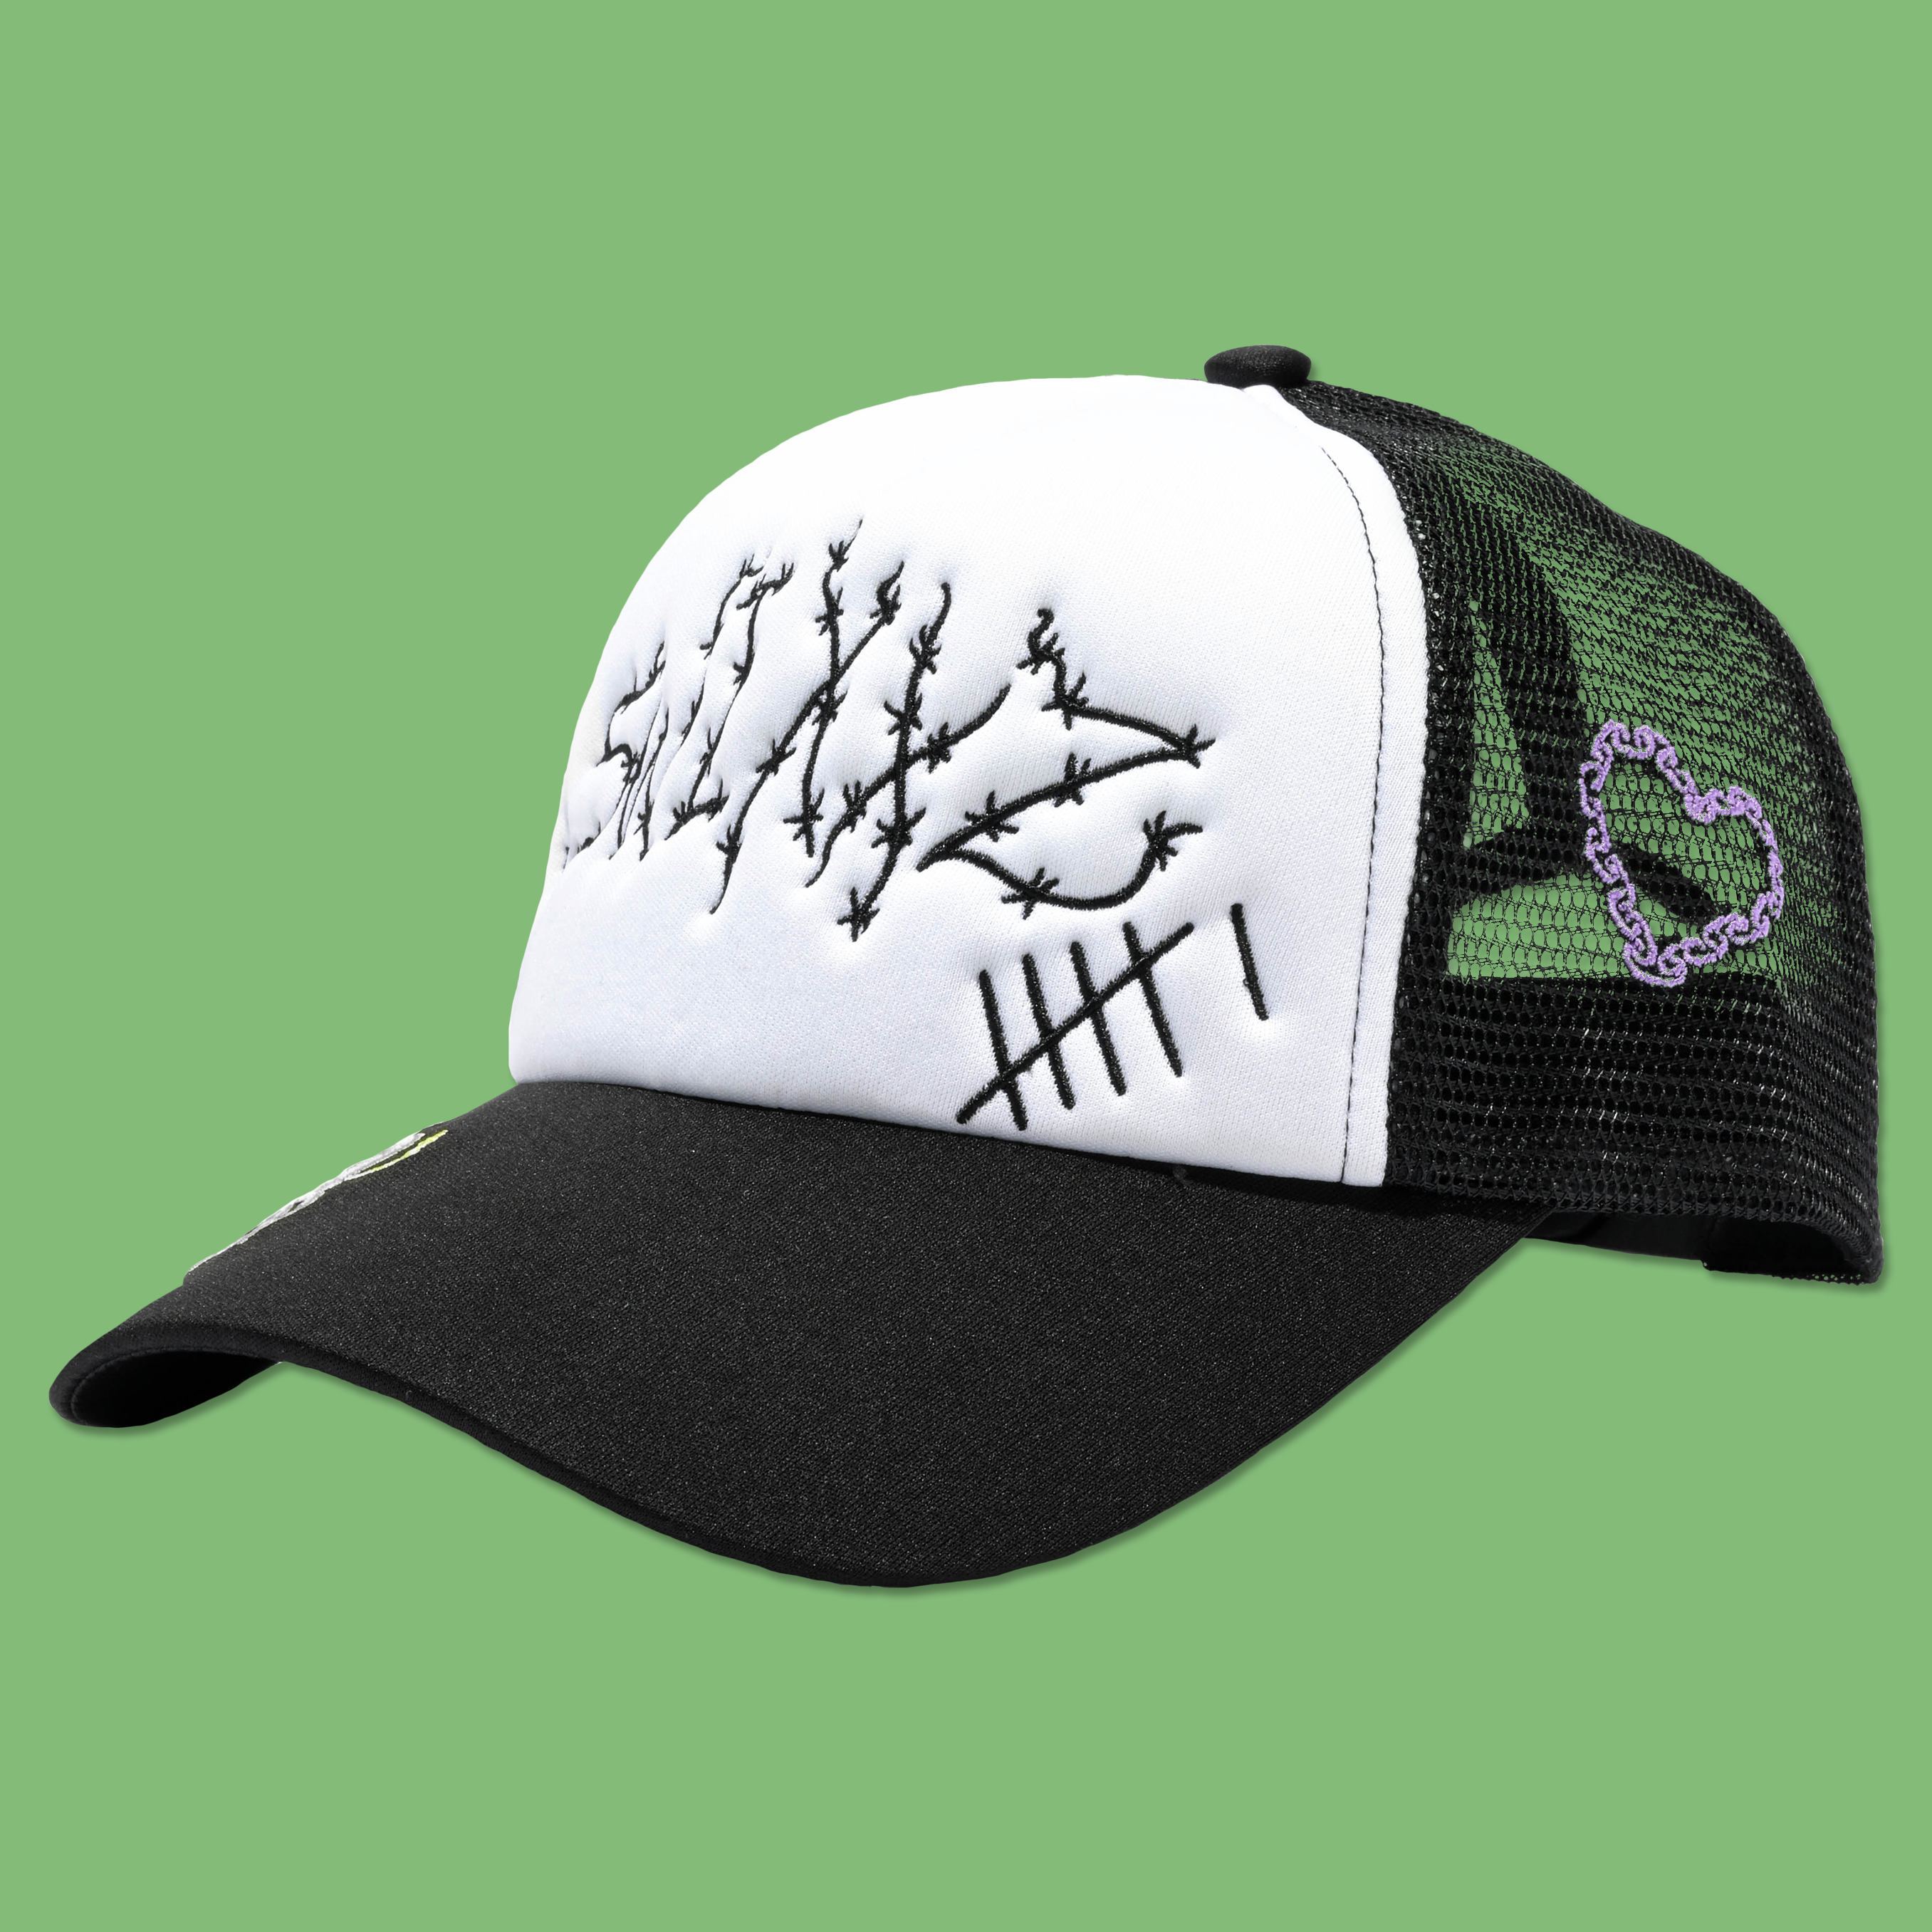 Cute N Creepy Trucker Hat from SWIXXZ by Maggie Lindemann - Front